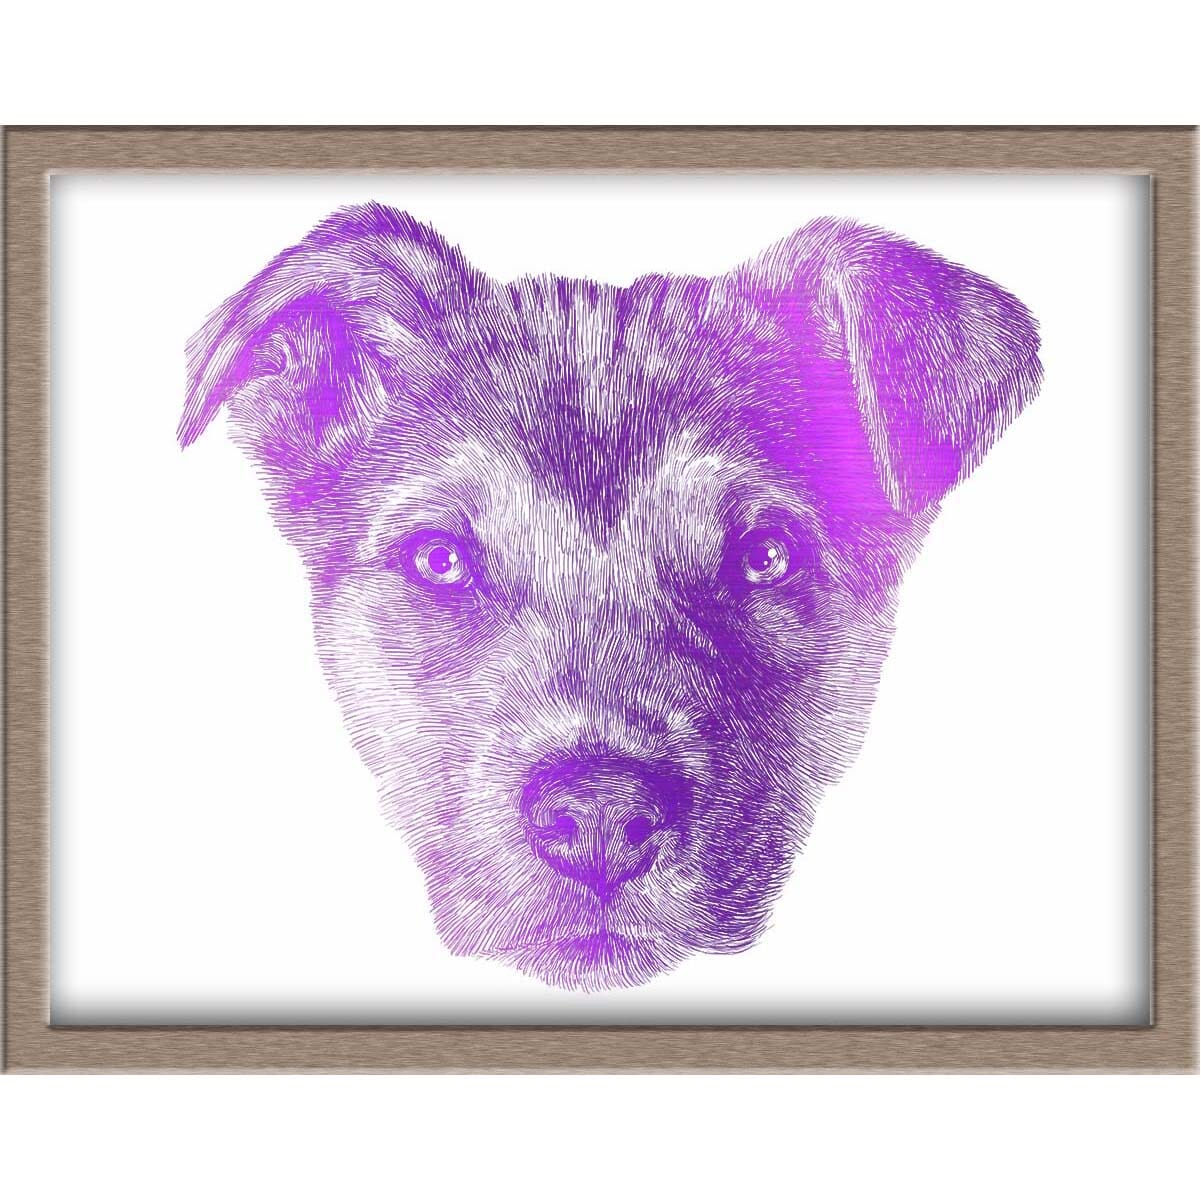 Puppy Dog Foiled Print (Riley) Posters, Prints, & Visual Artwork JoyousJoyfulJoyness 